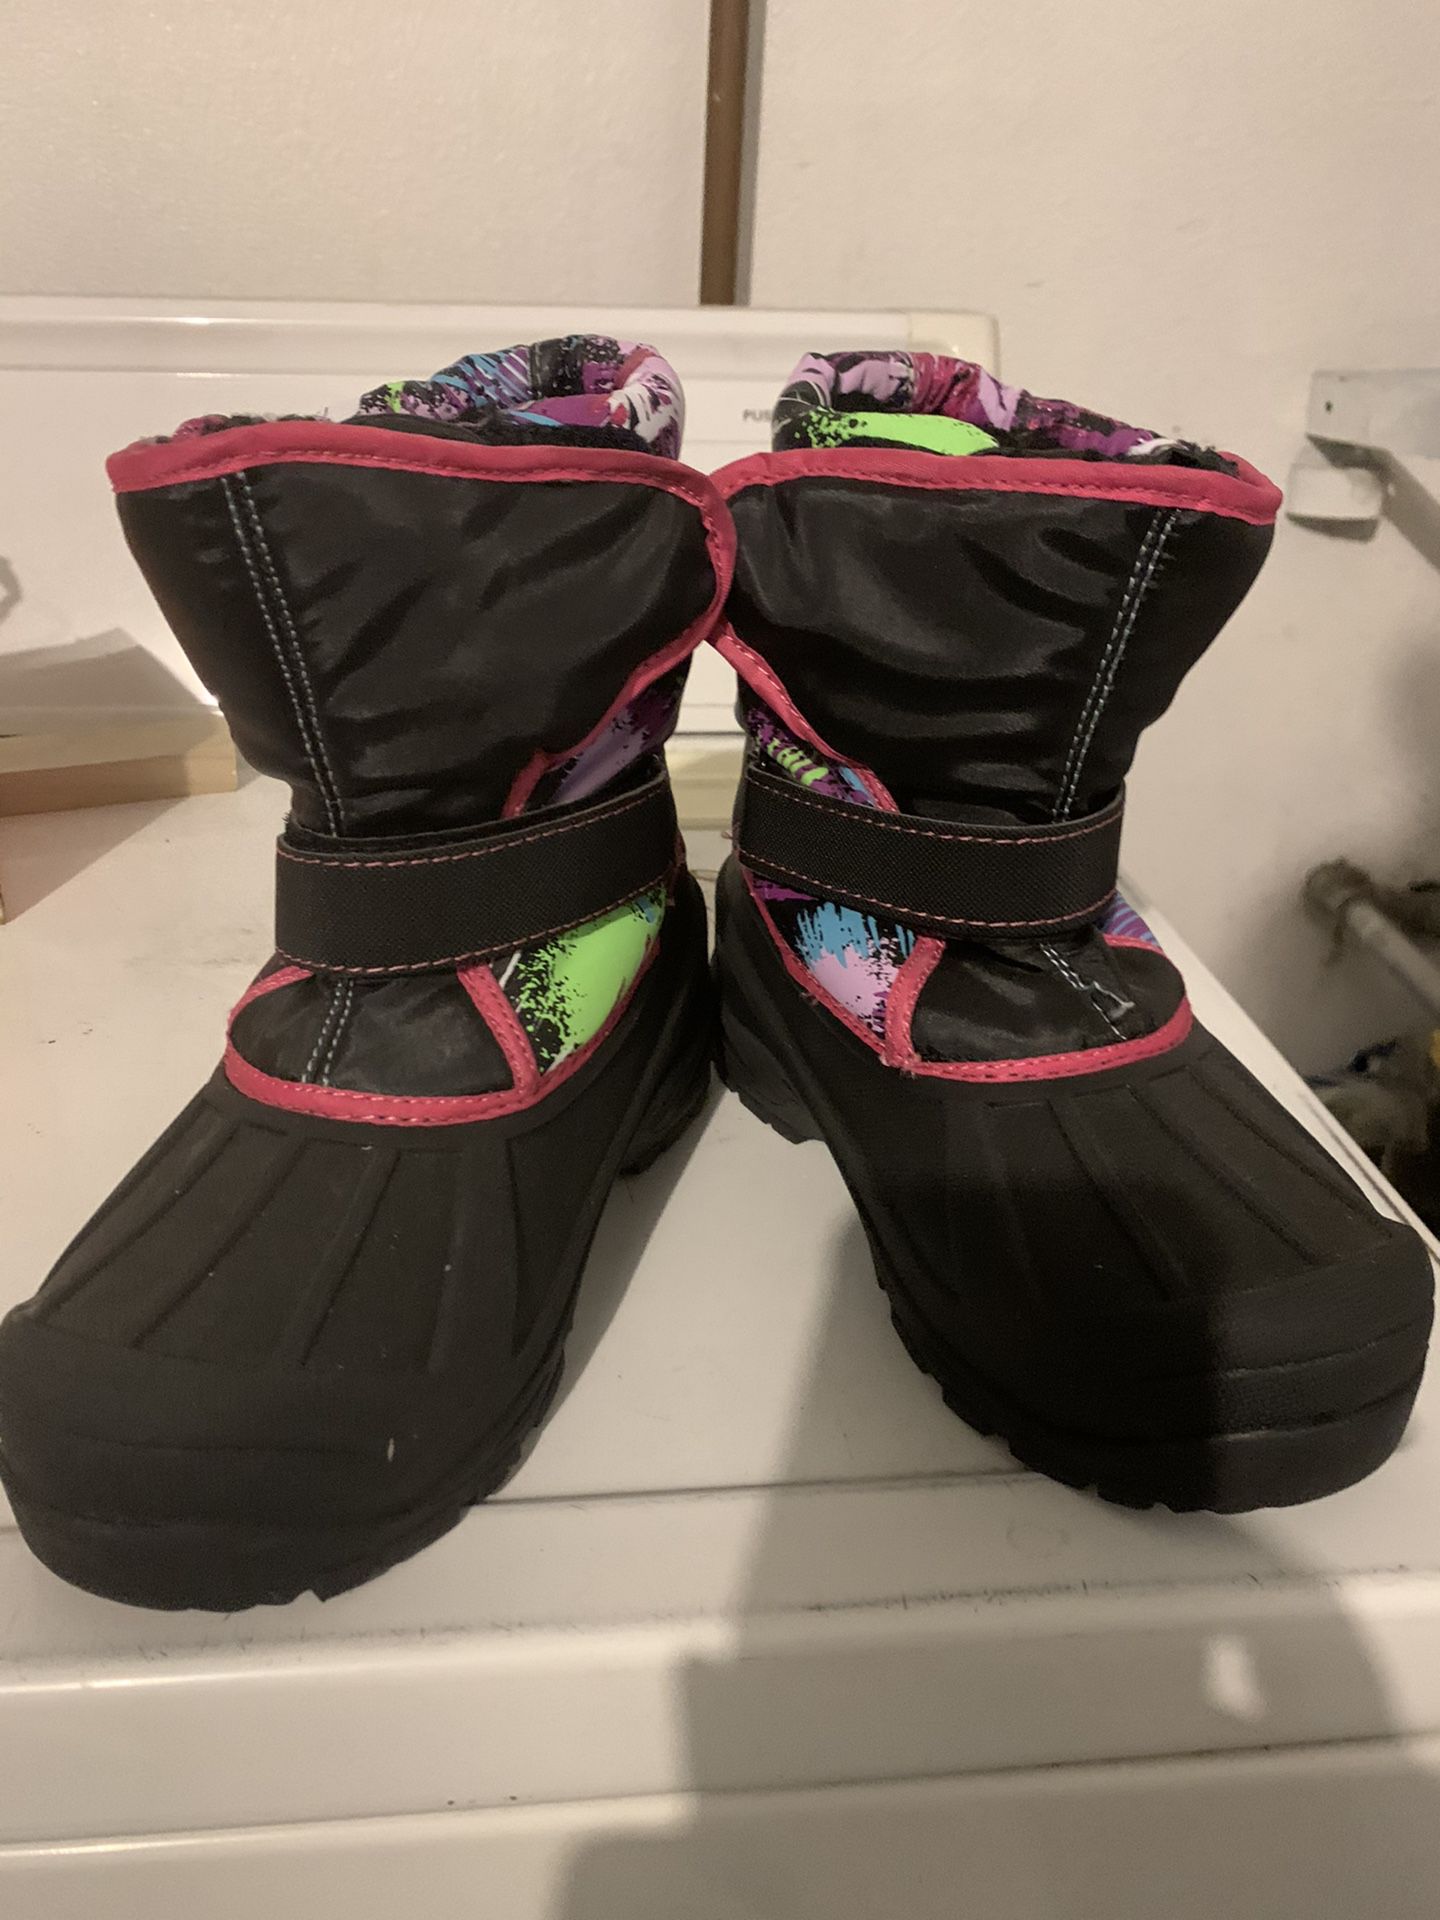 Kids size 3 snow boots